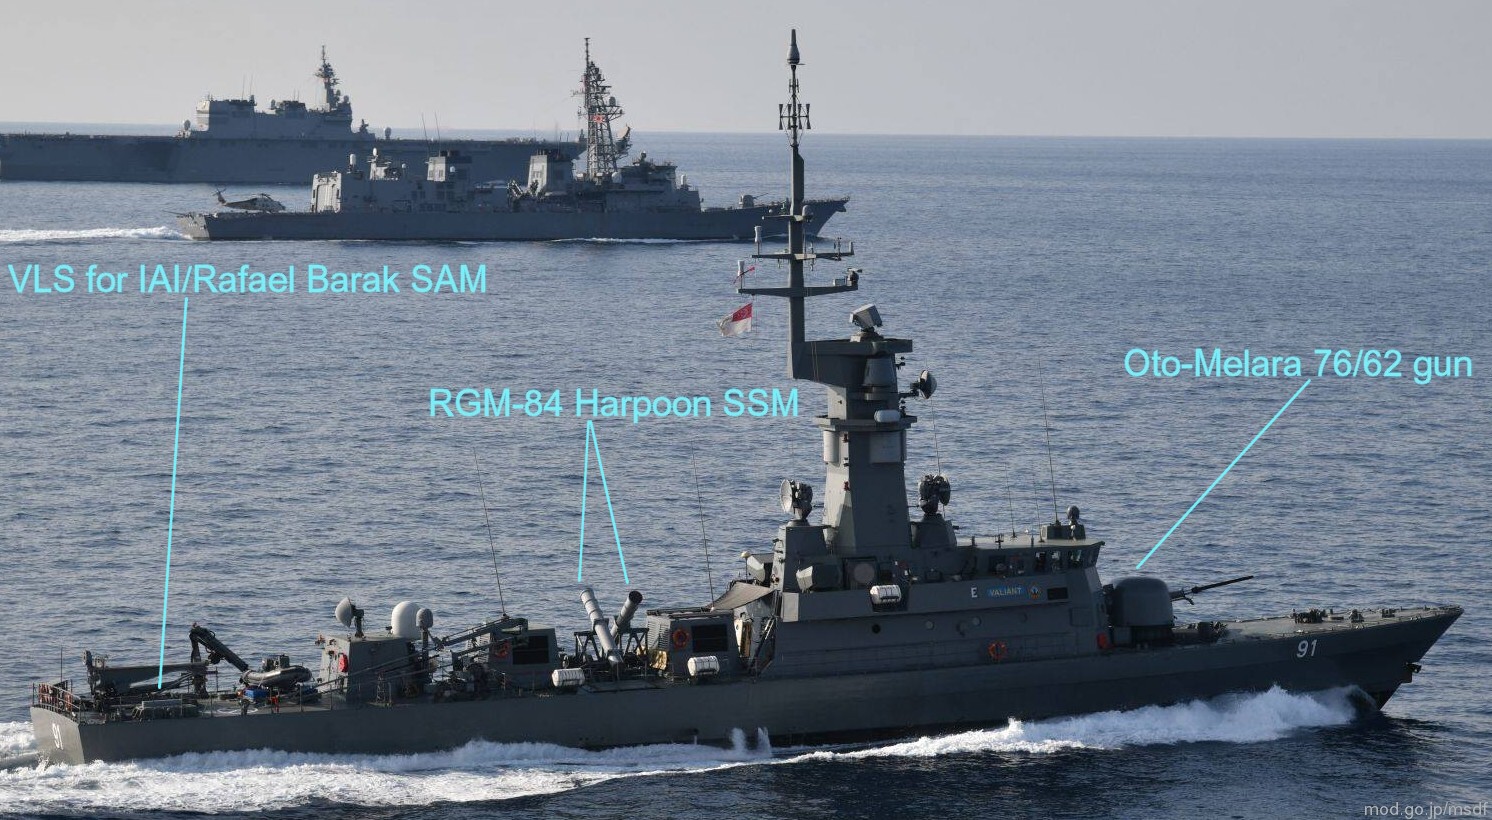 victory class missile corvette singapore navy iai rafael barak sam rgm-84 harpoon ssm oto melara 76/62 gun armament 02